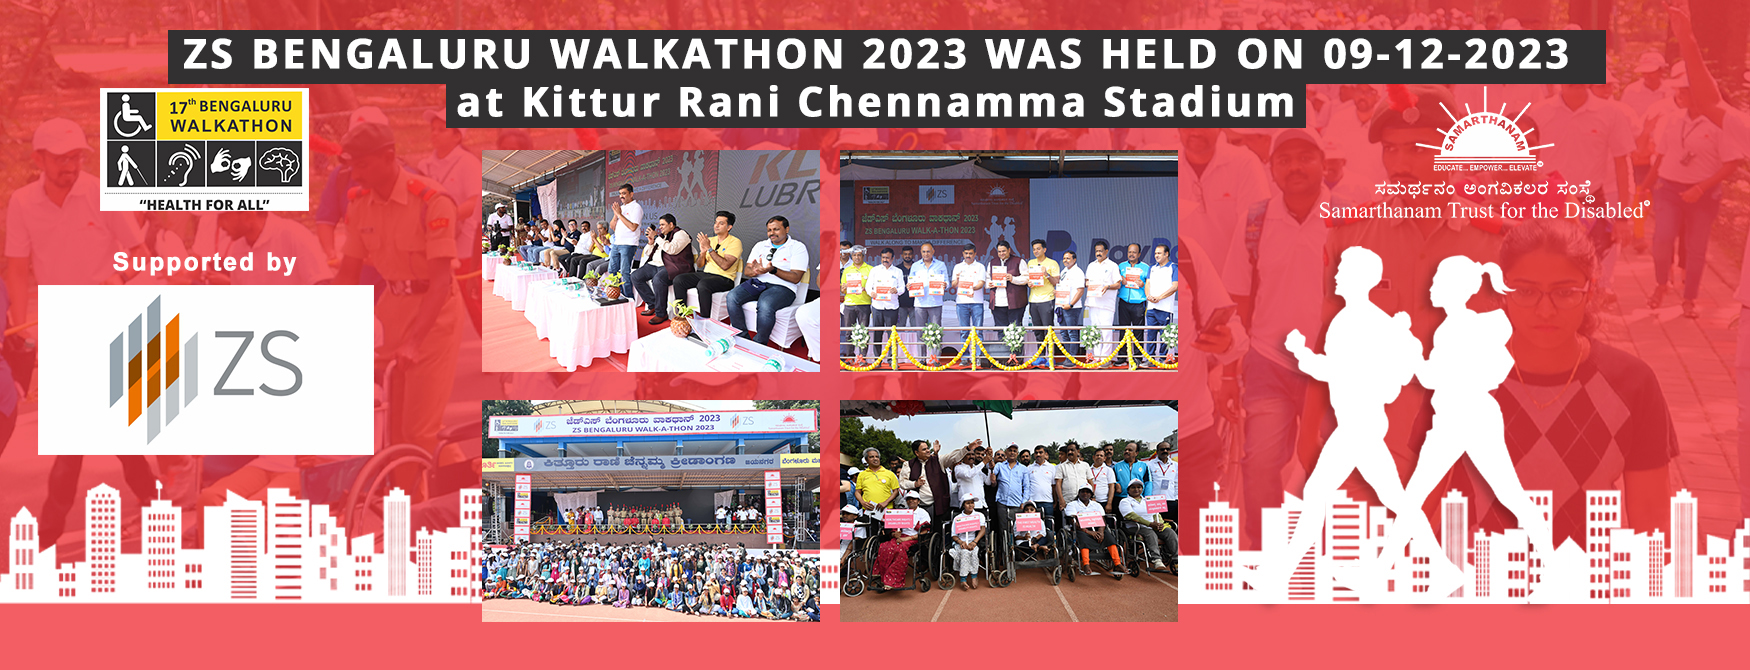 zs Bengaluru walkathon 2023 completion